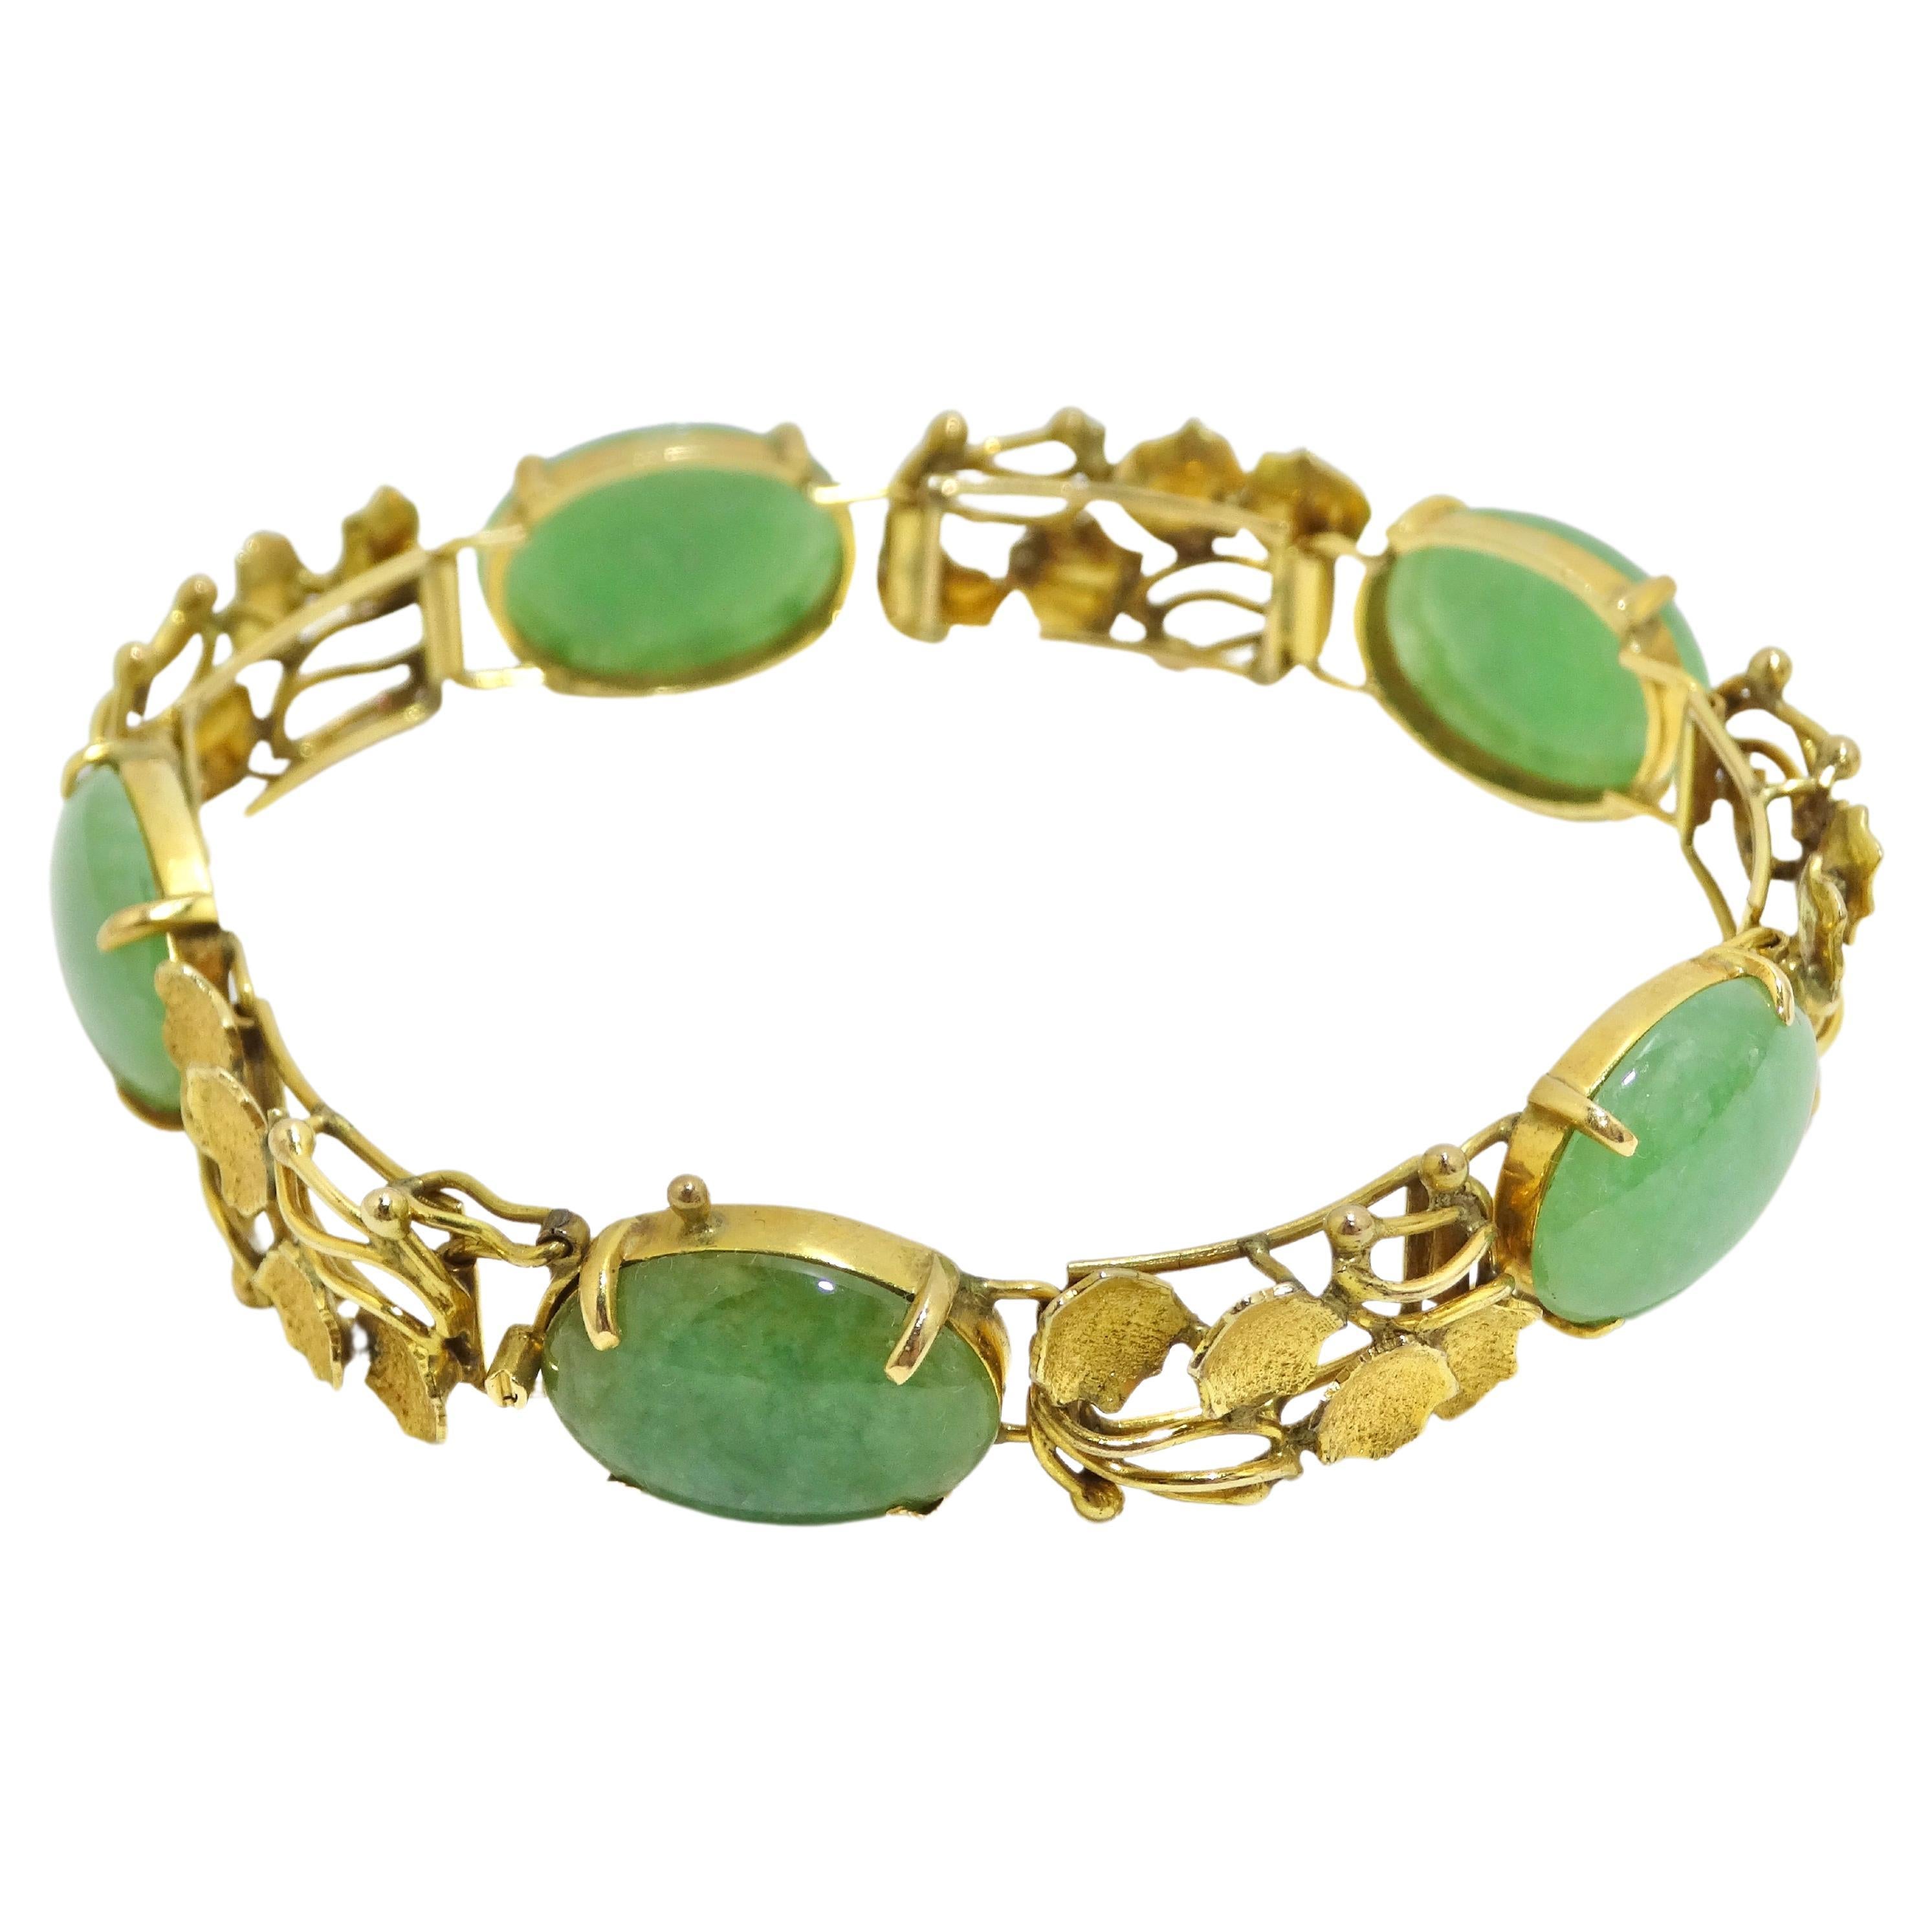 Jade 14k Gold Ornate Bracelet